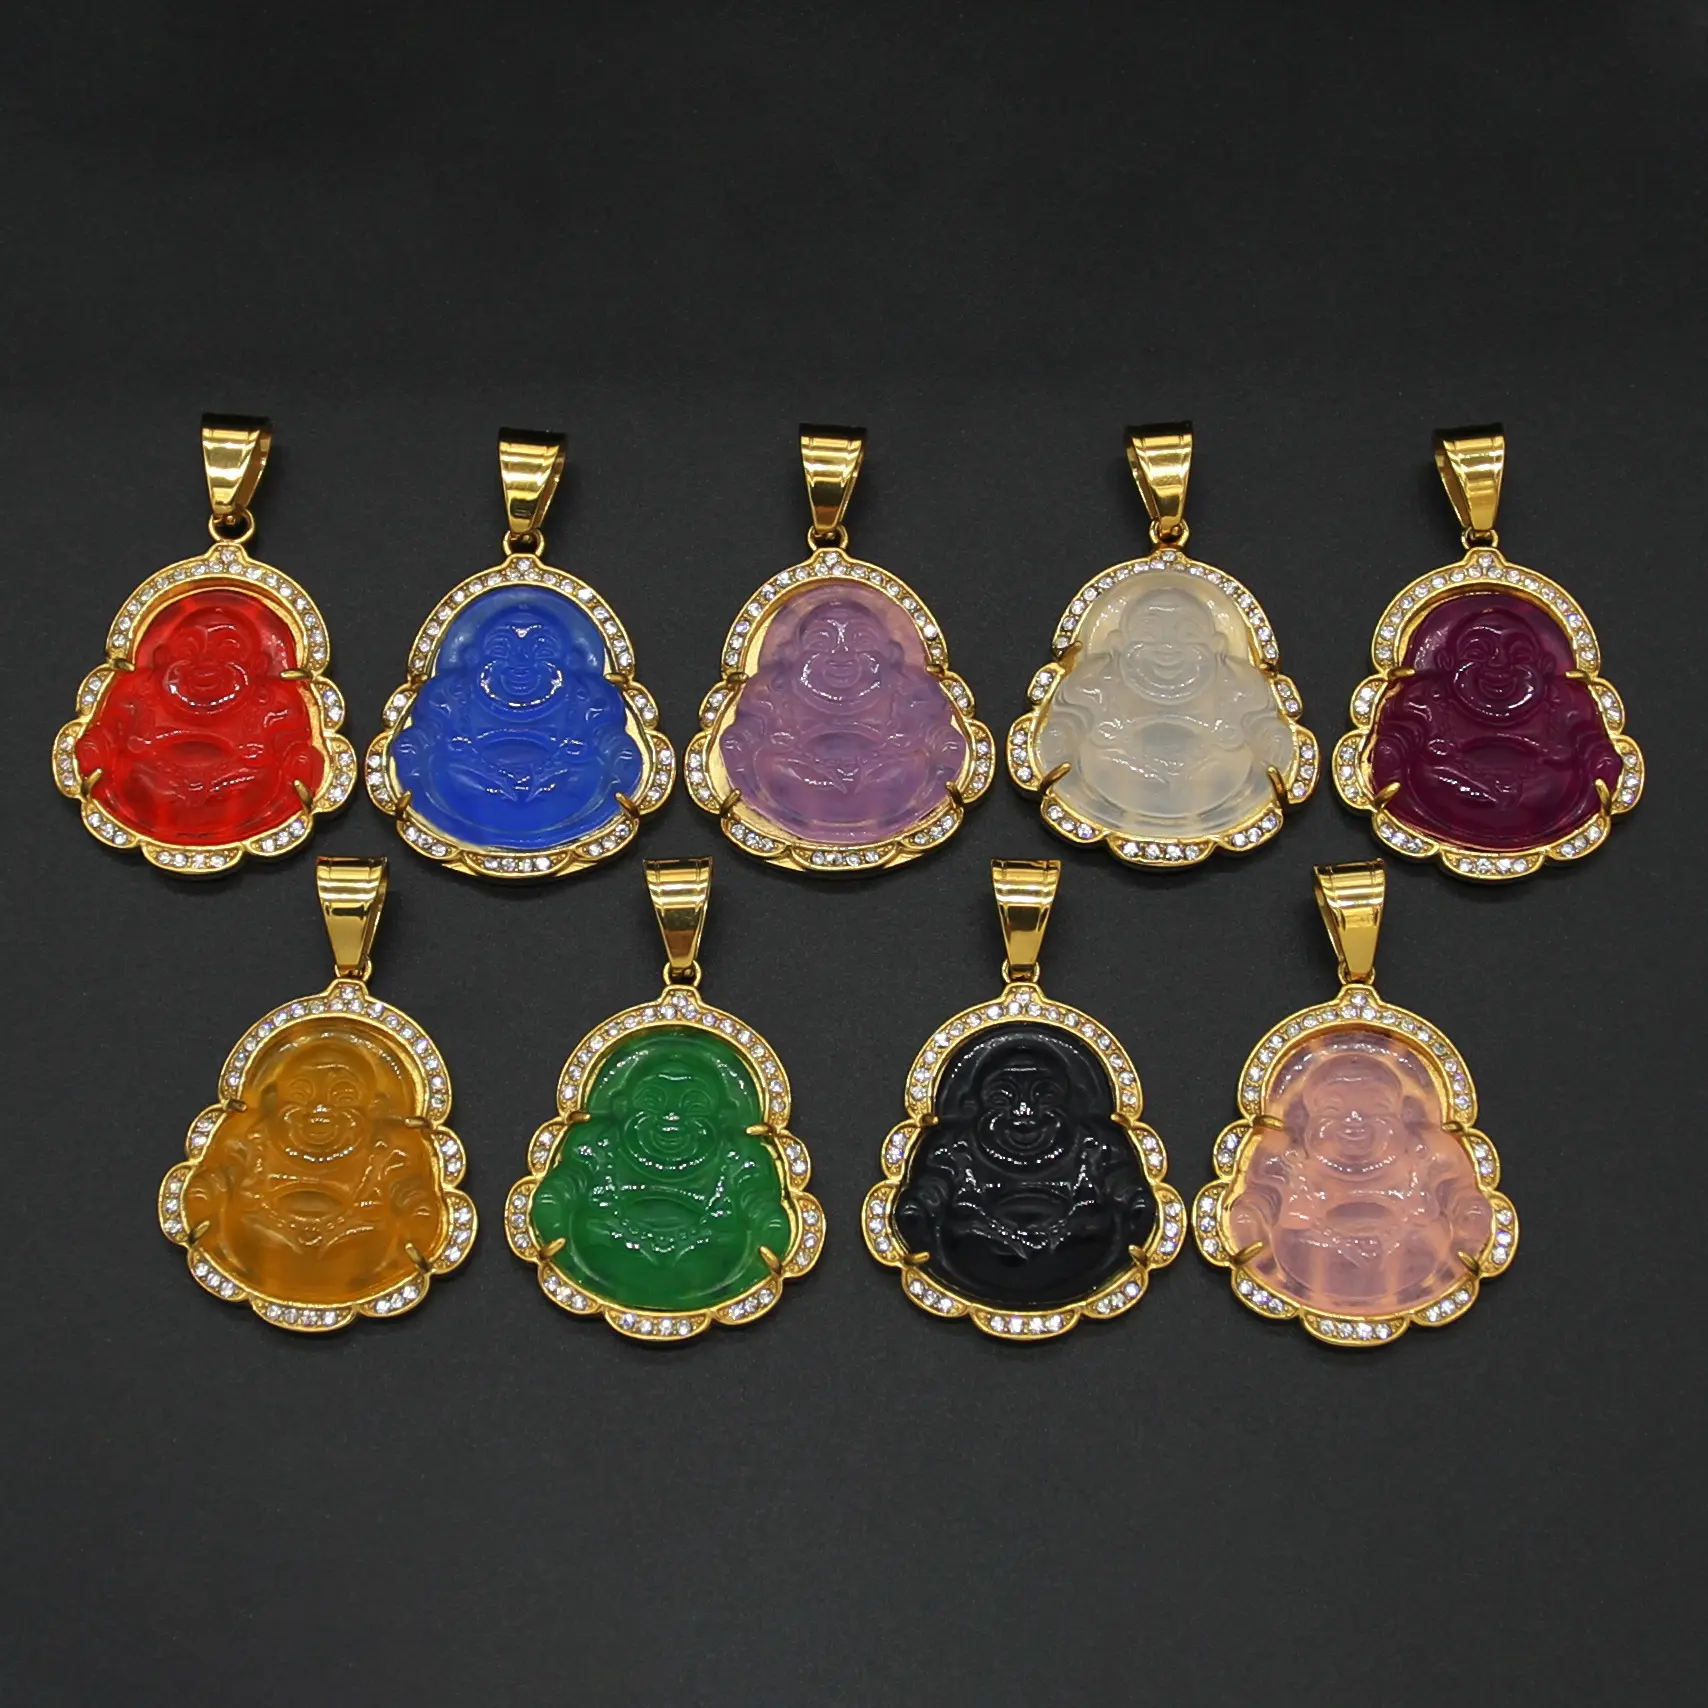 Collier pendentif bouddha en acier inoxydable, bord en cristal, plusieurs couleurs, Jade naturel, pendentif religieux